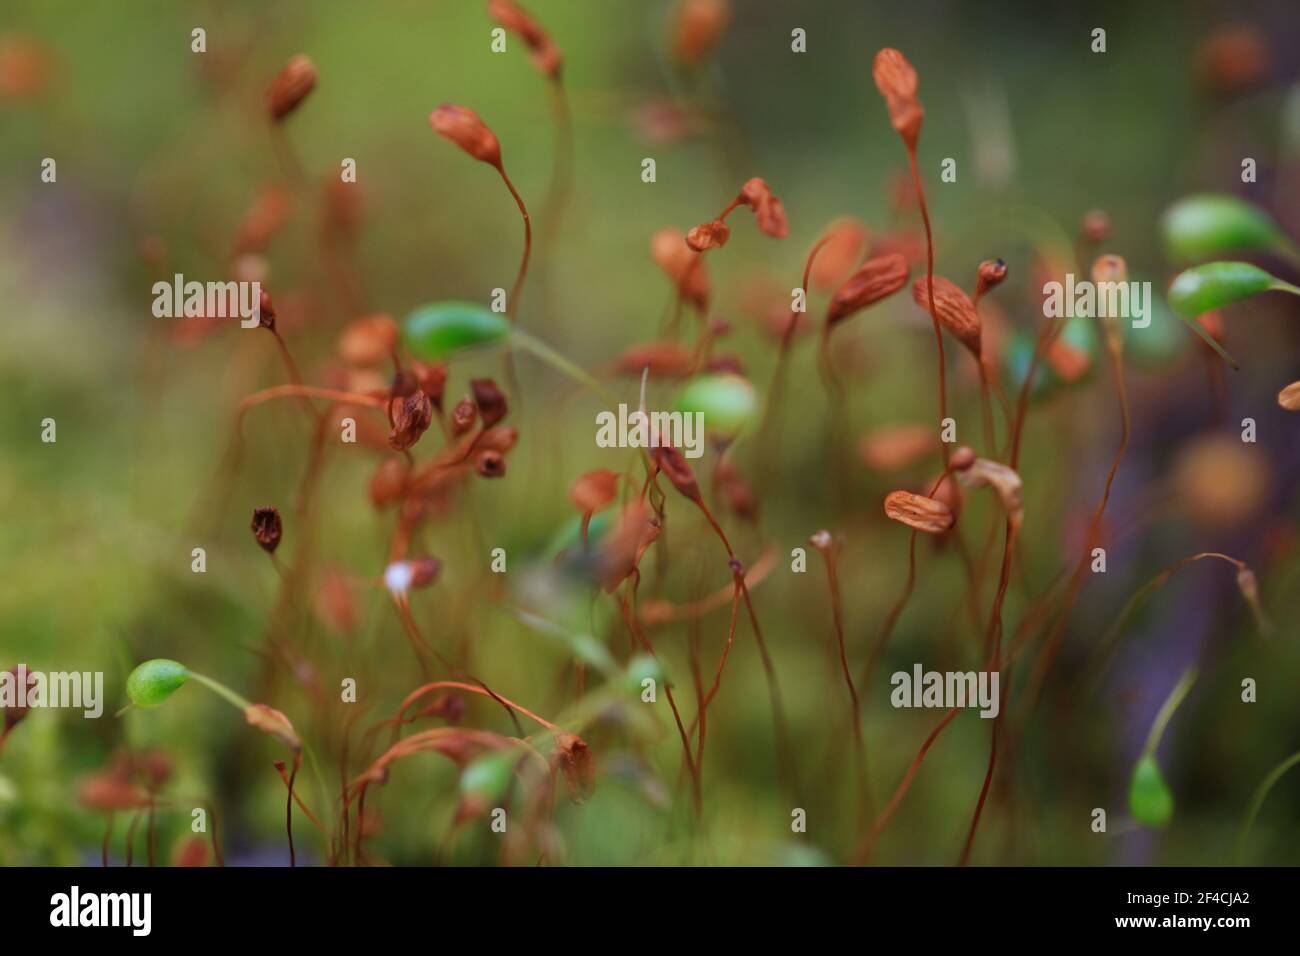 https://www.alamy.com/british-mosses-macro-view-of-dicranella-moss-growing-in-essex-britain-2021-image415785274.html